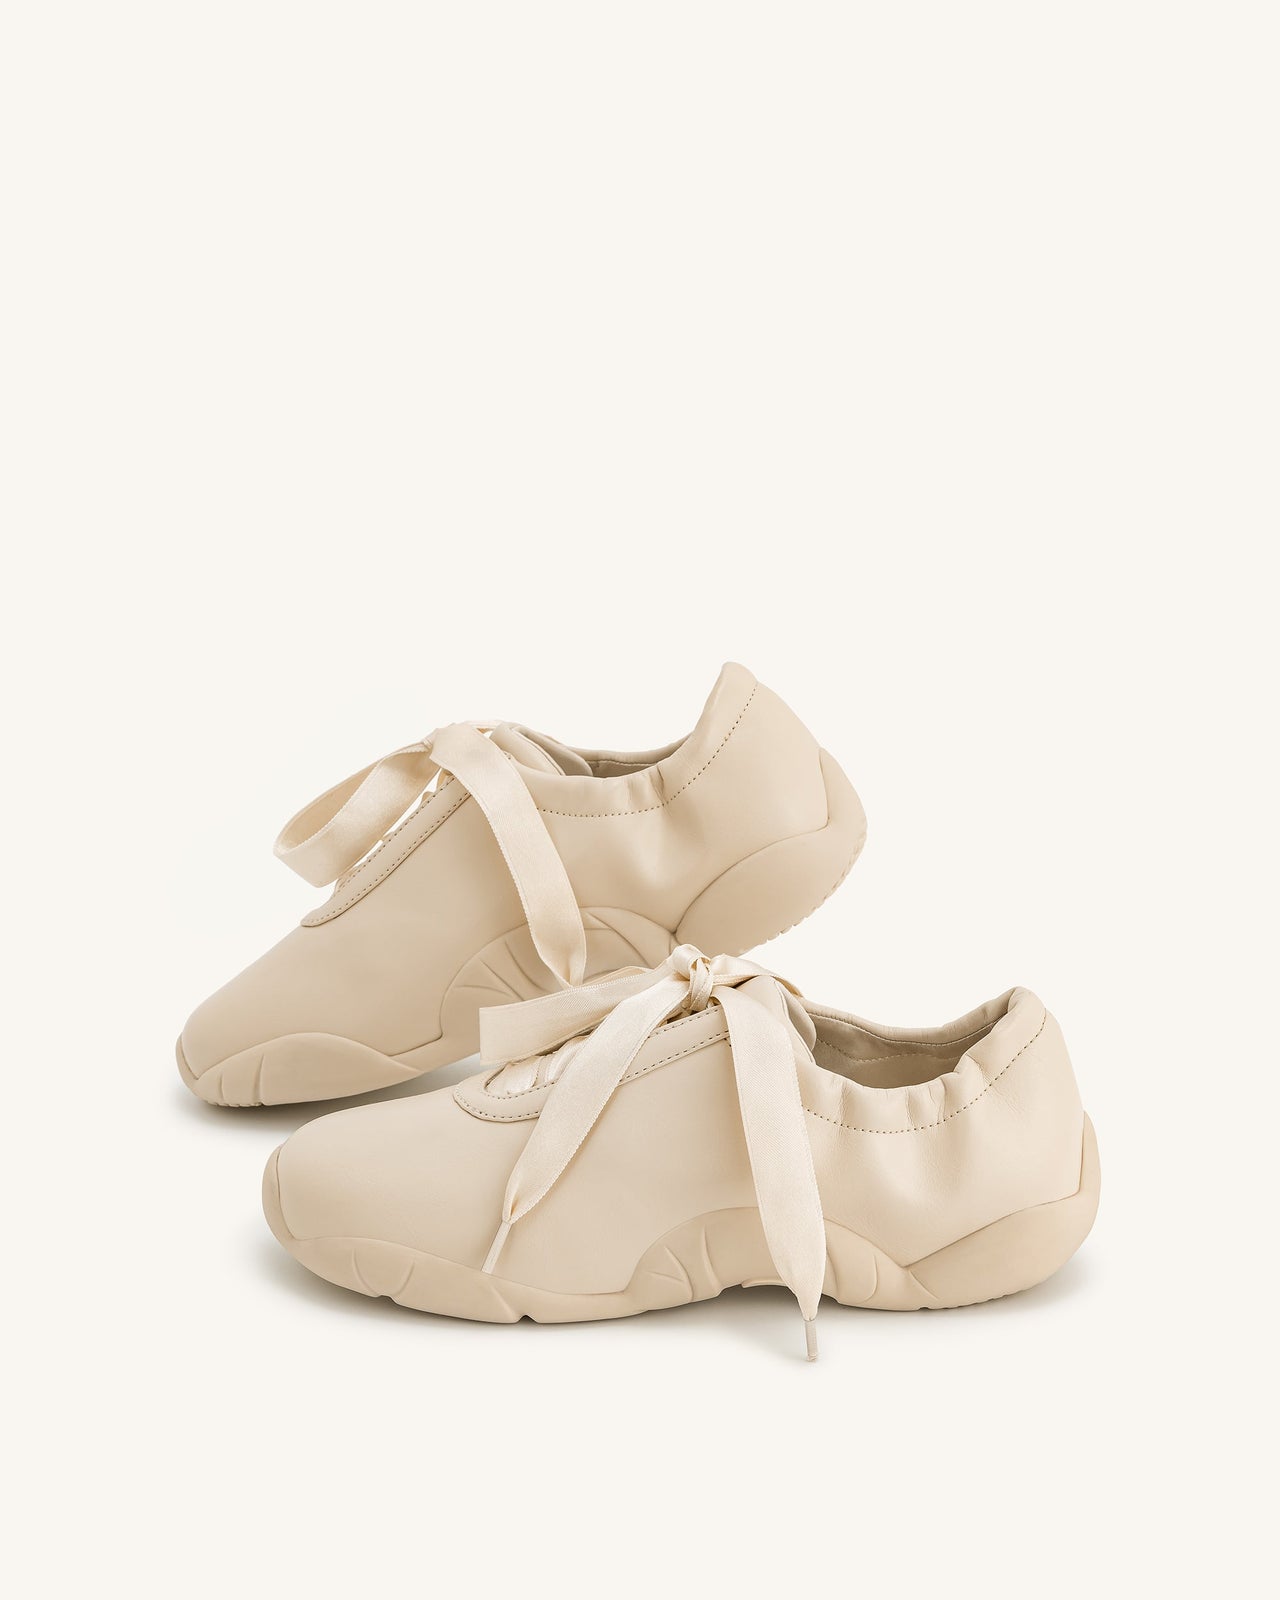 Flavia Ballerina Sneakers - Abricot